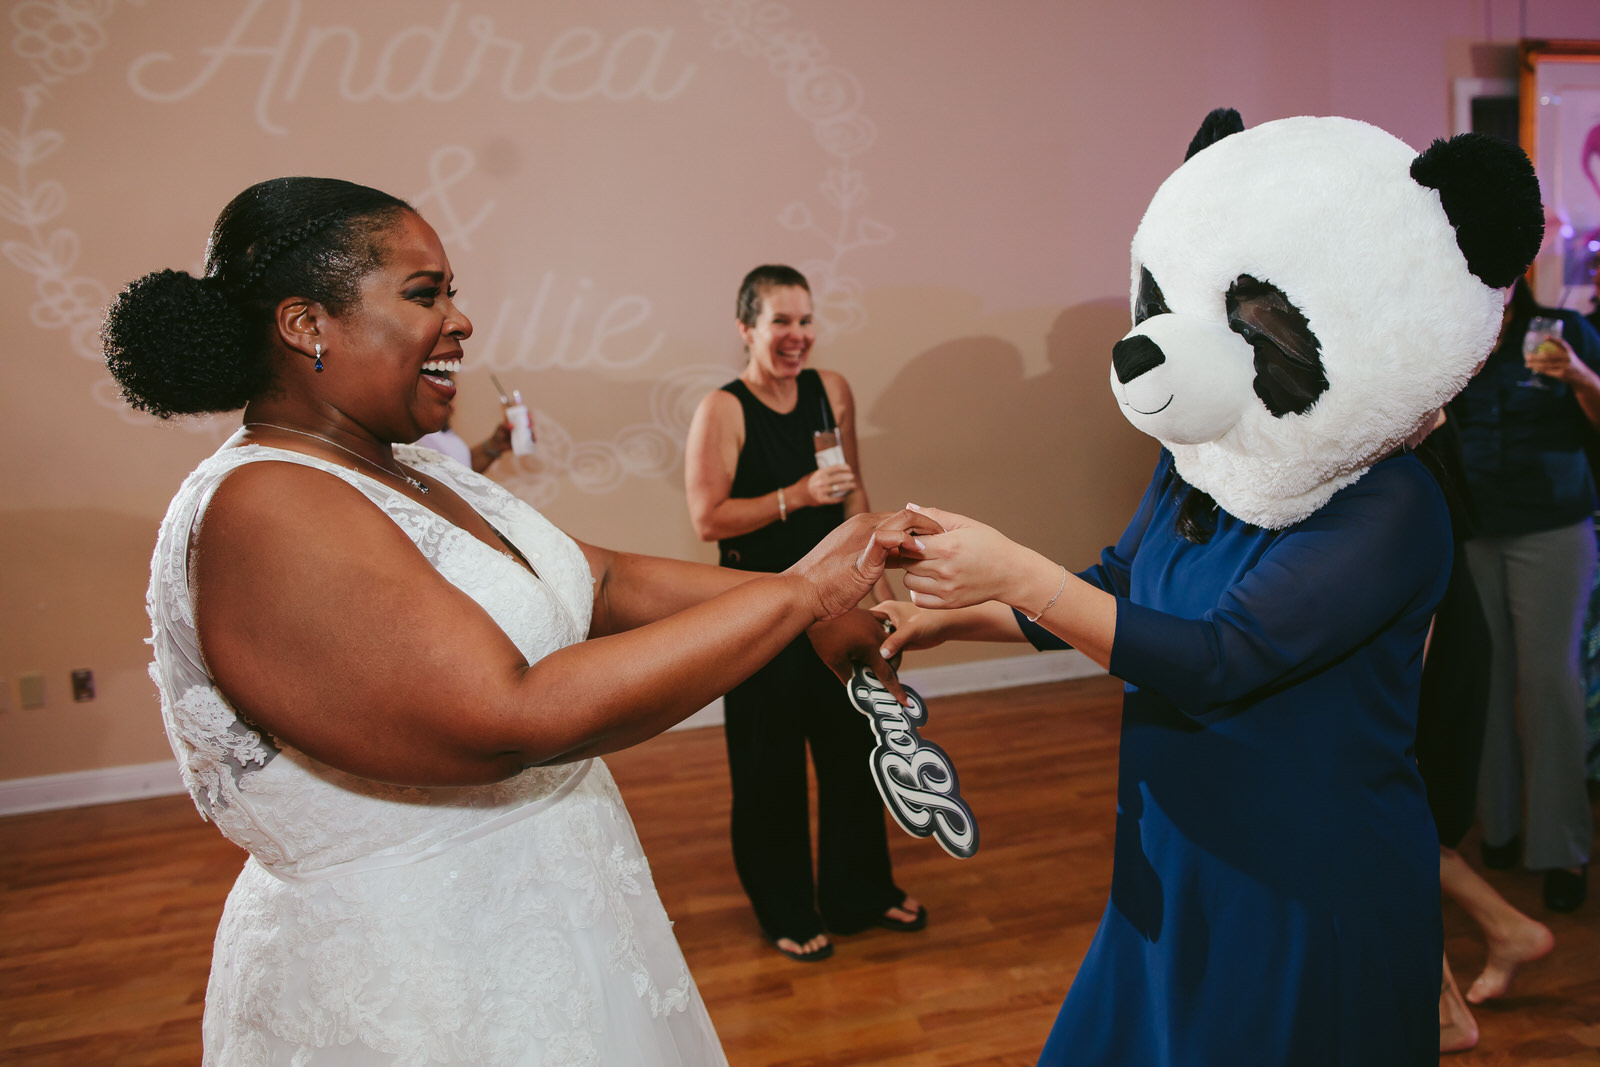 Panda_Dancing_Benvenuto_Wedding_Reception_Tiny_House_Photo.jpg